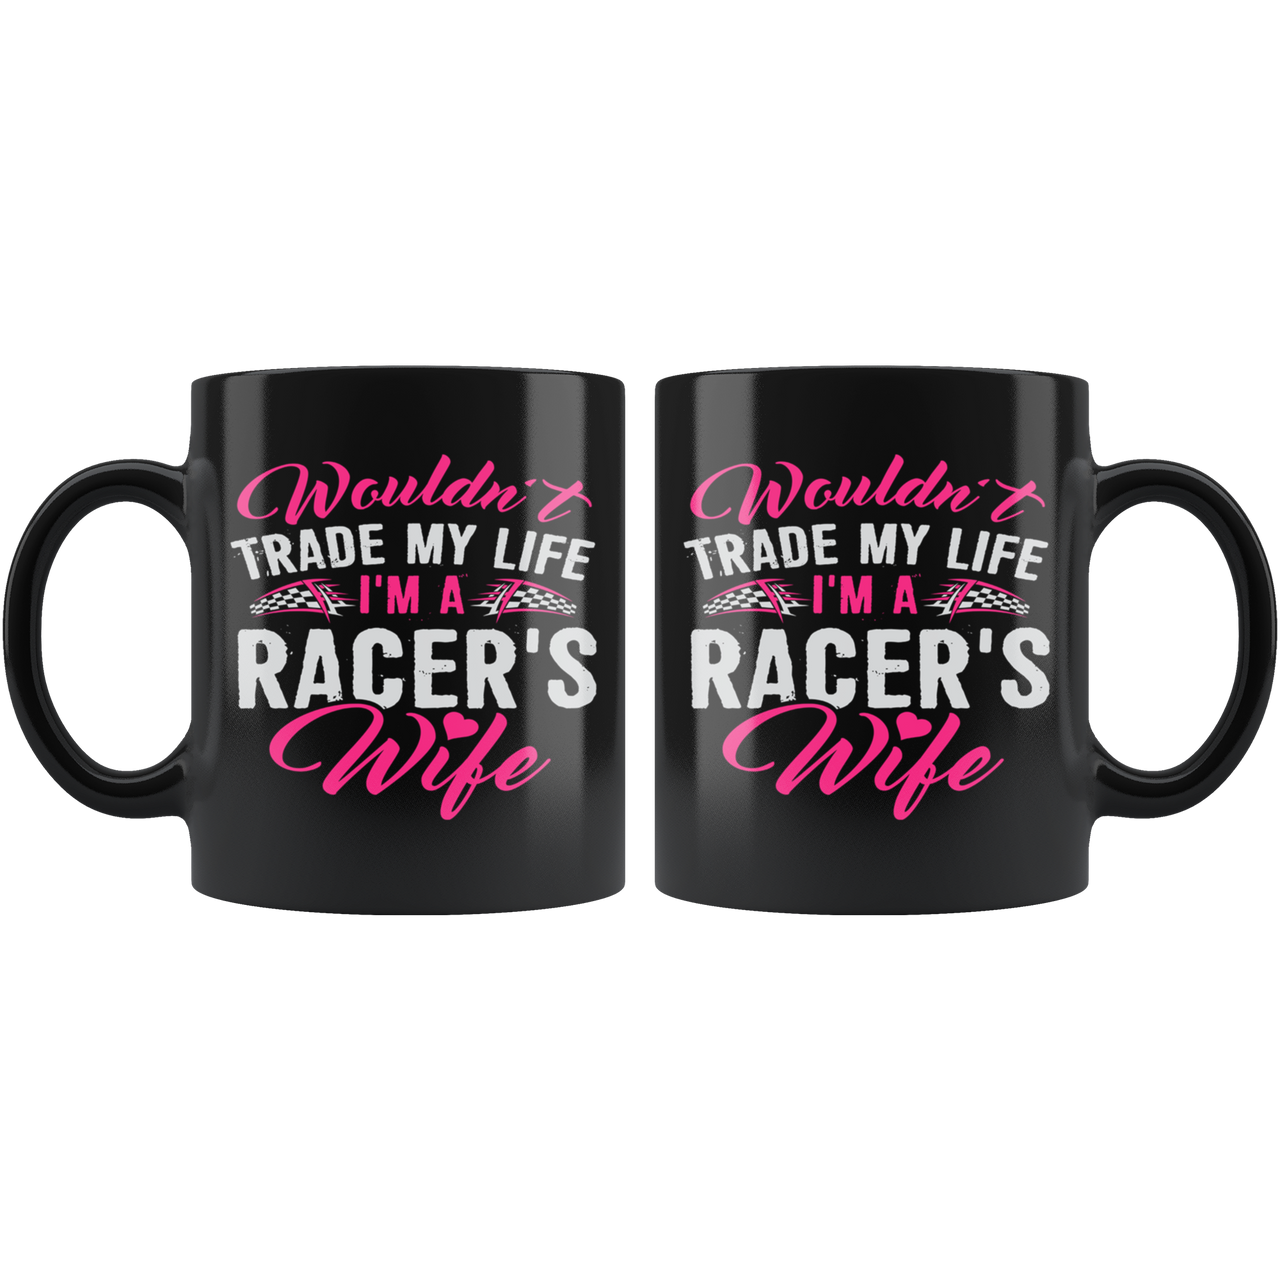 Wouldn't Trade My Life I'm A Racer's Wife Mug!